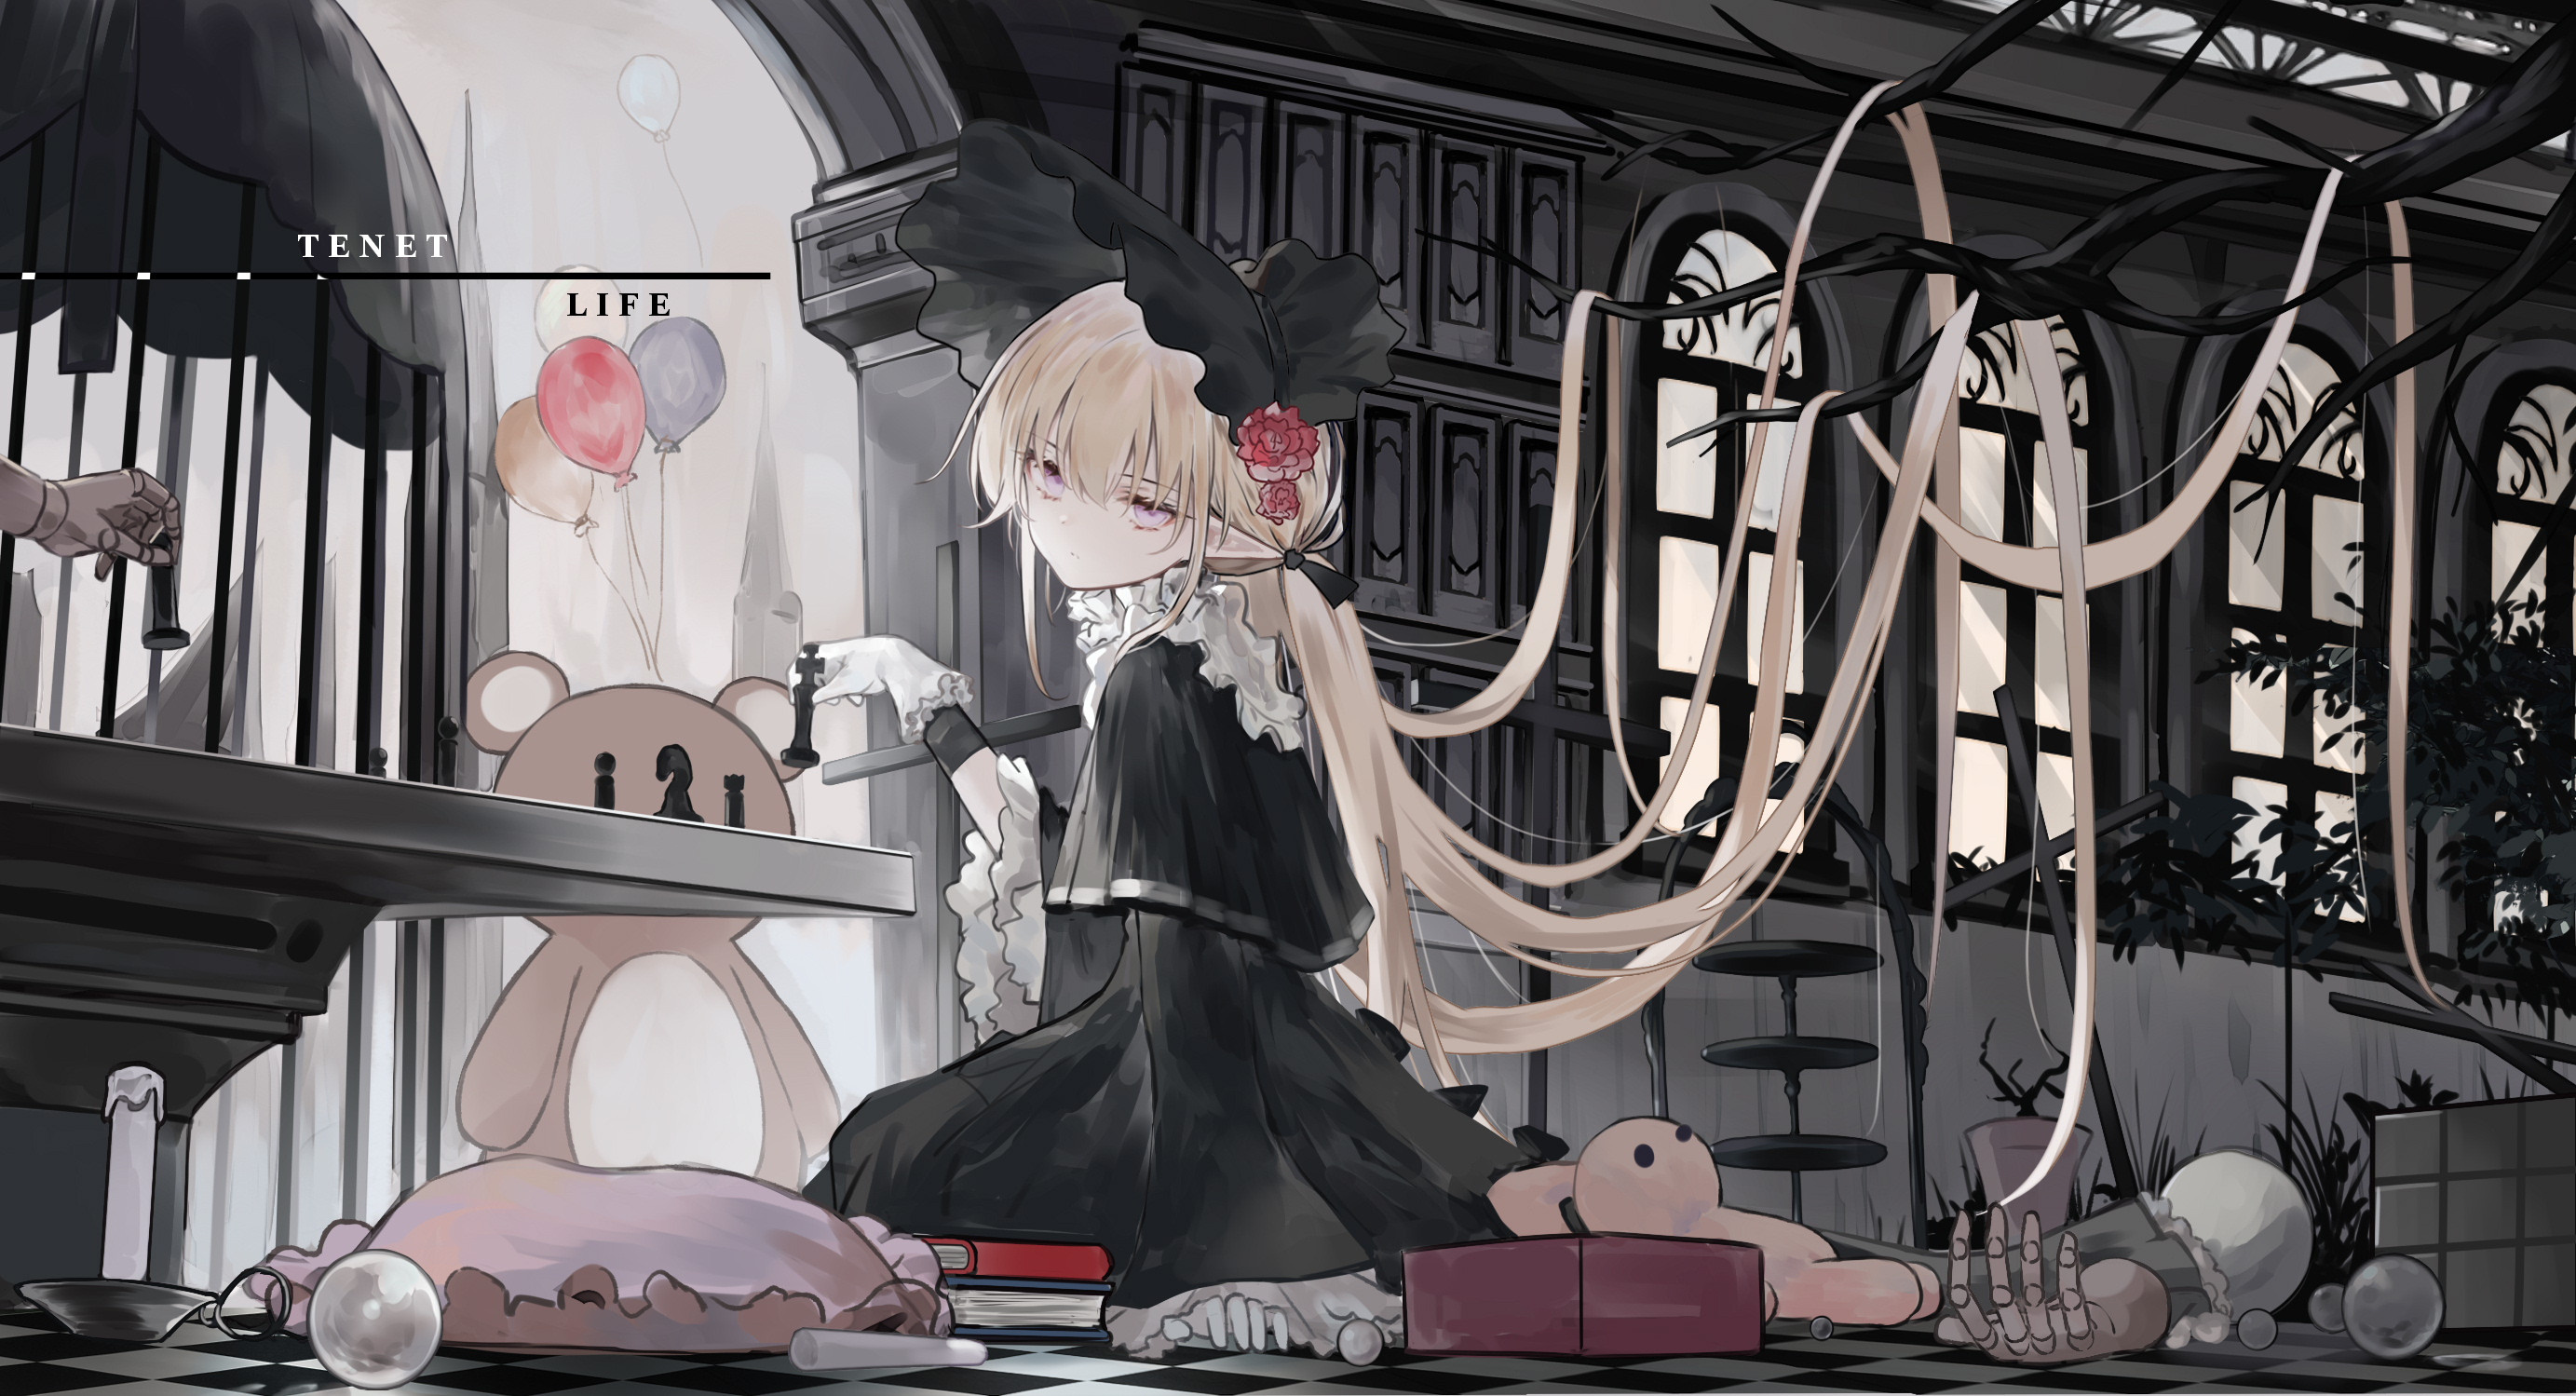 Gothic Anime: Sad anime girl, Twintails, Dark Lolita fashion, Tenet life. 2770x1500 HD Background.